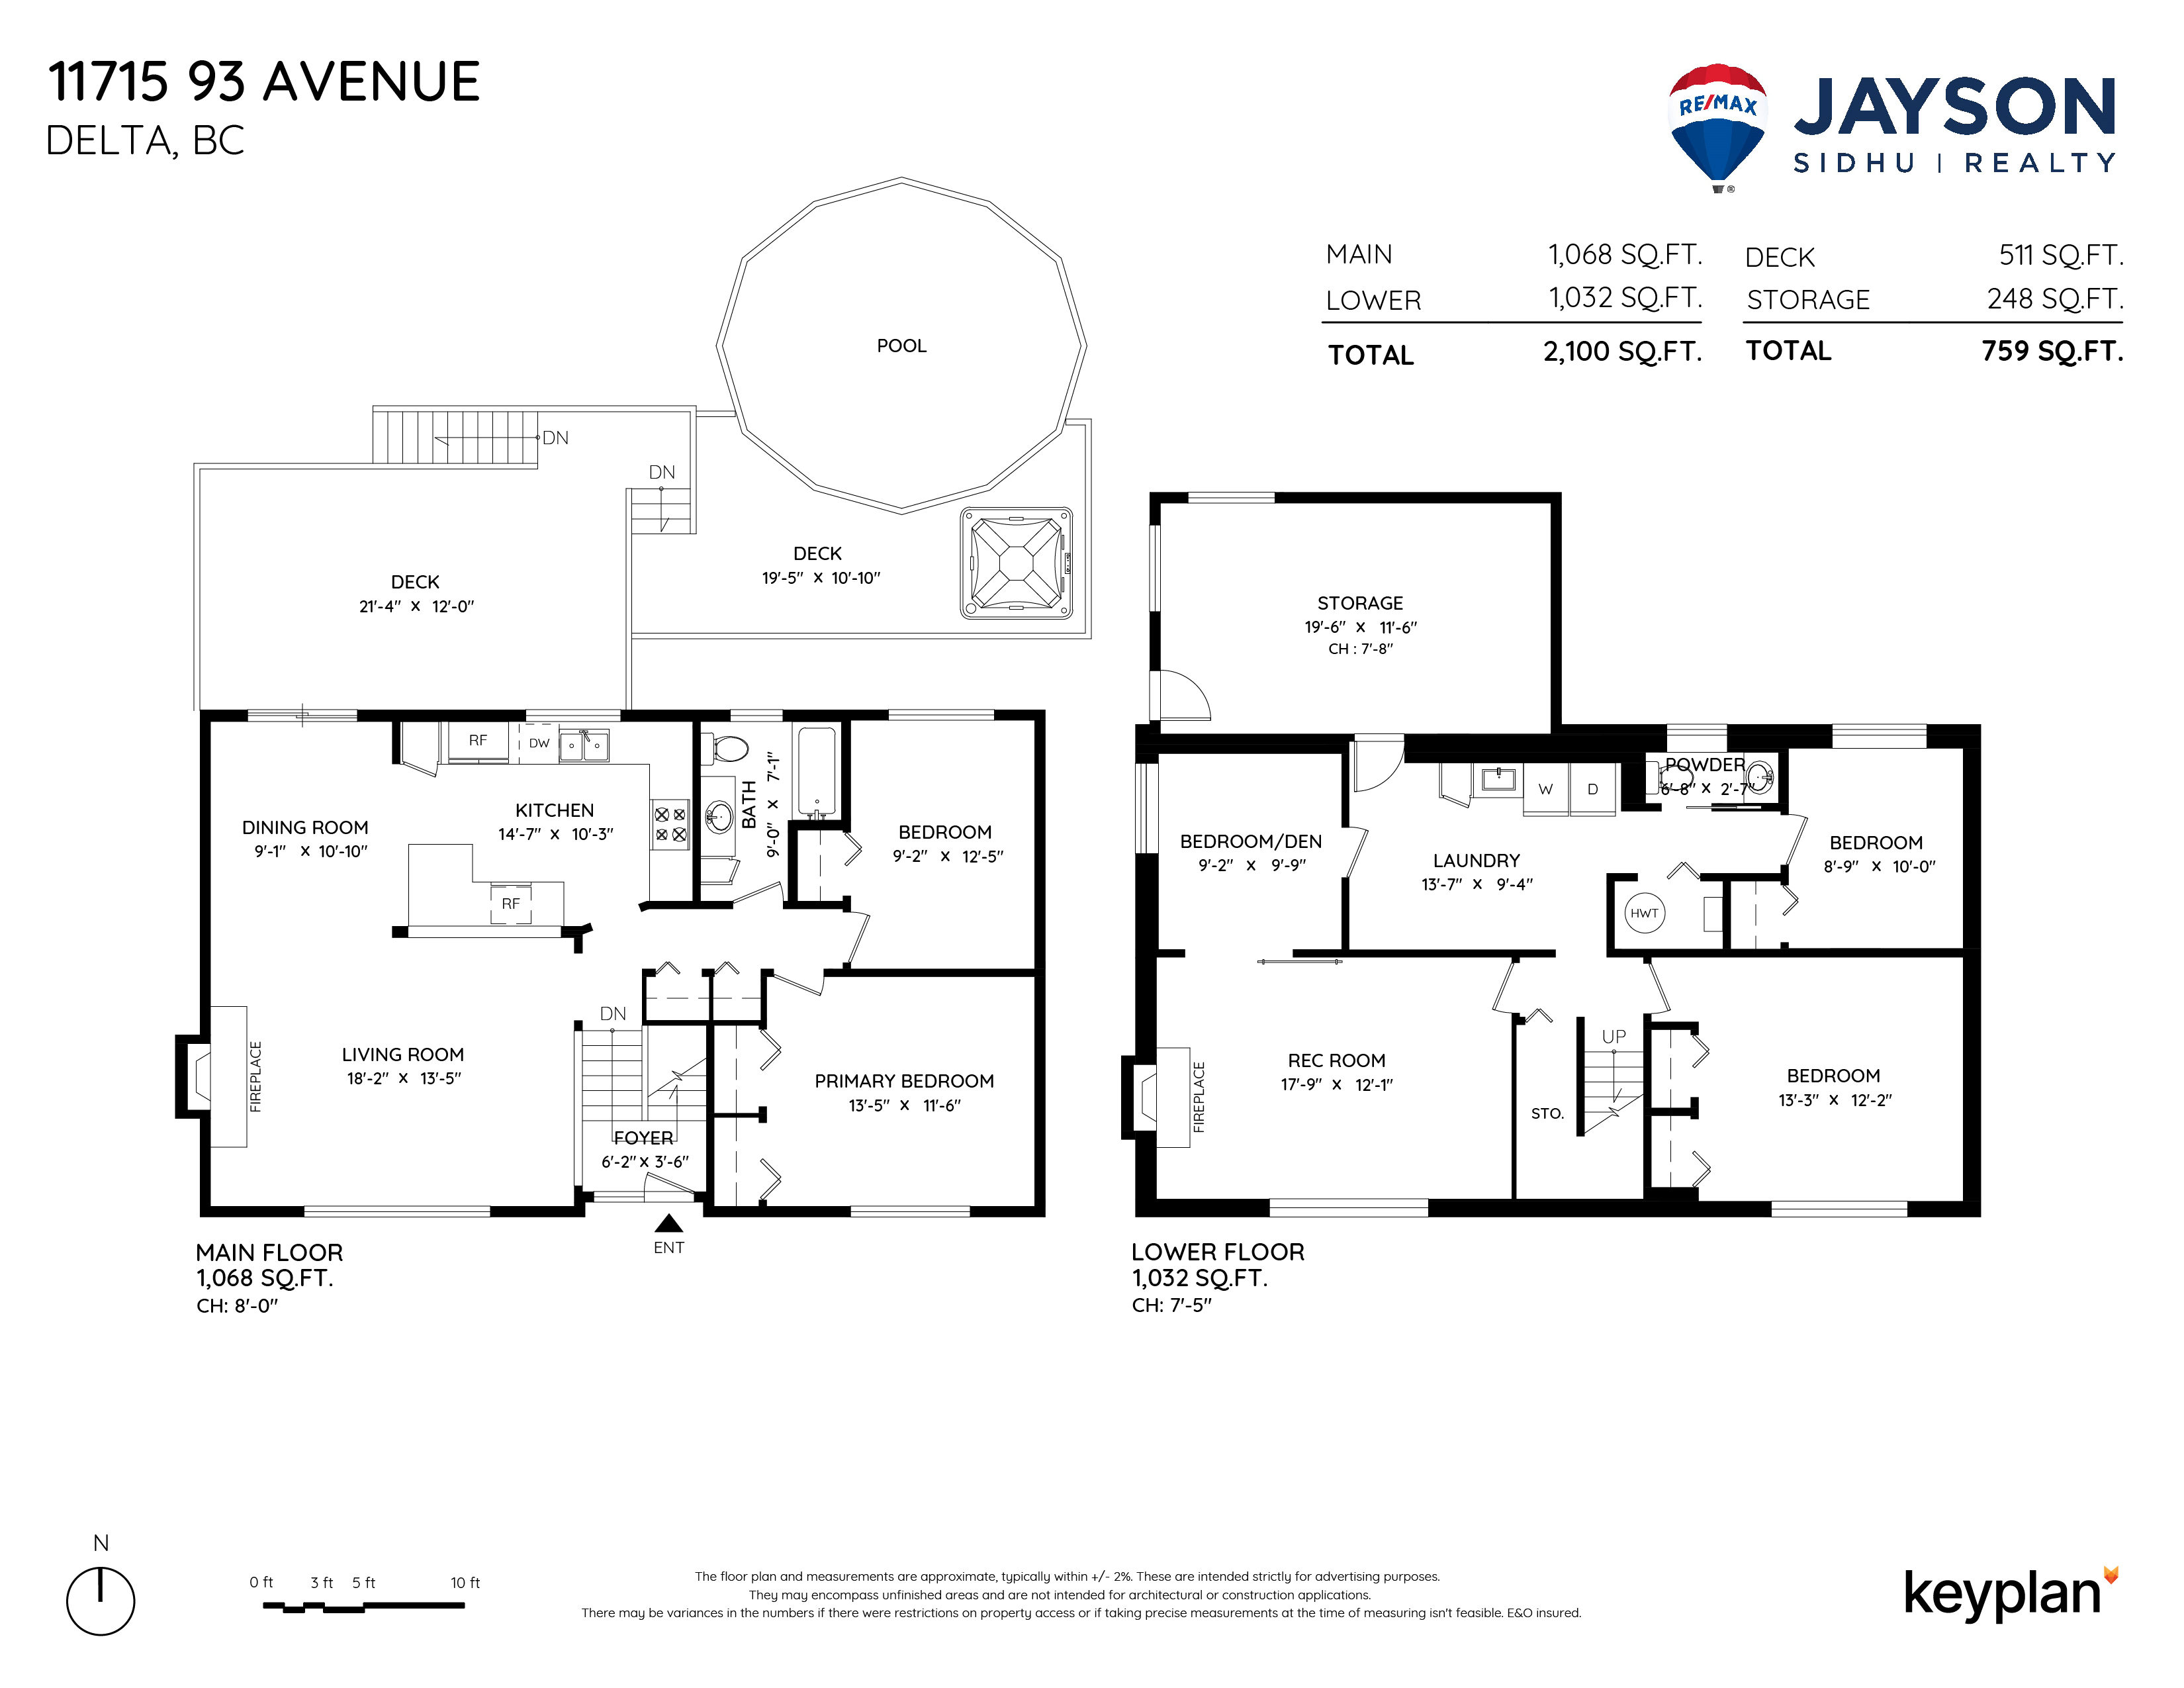 Jayson Sidhu - 11715 93 Avenue, Delta, BC, Canada | Floor Plan 1